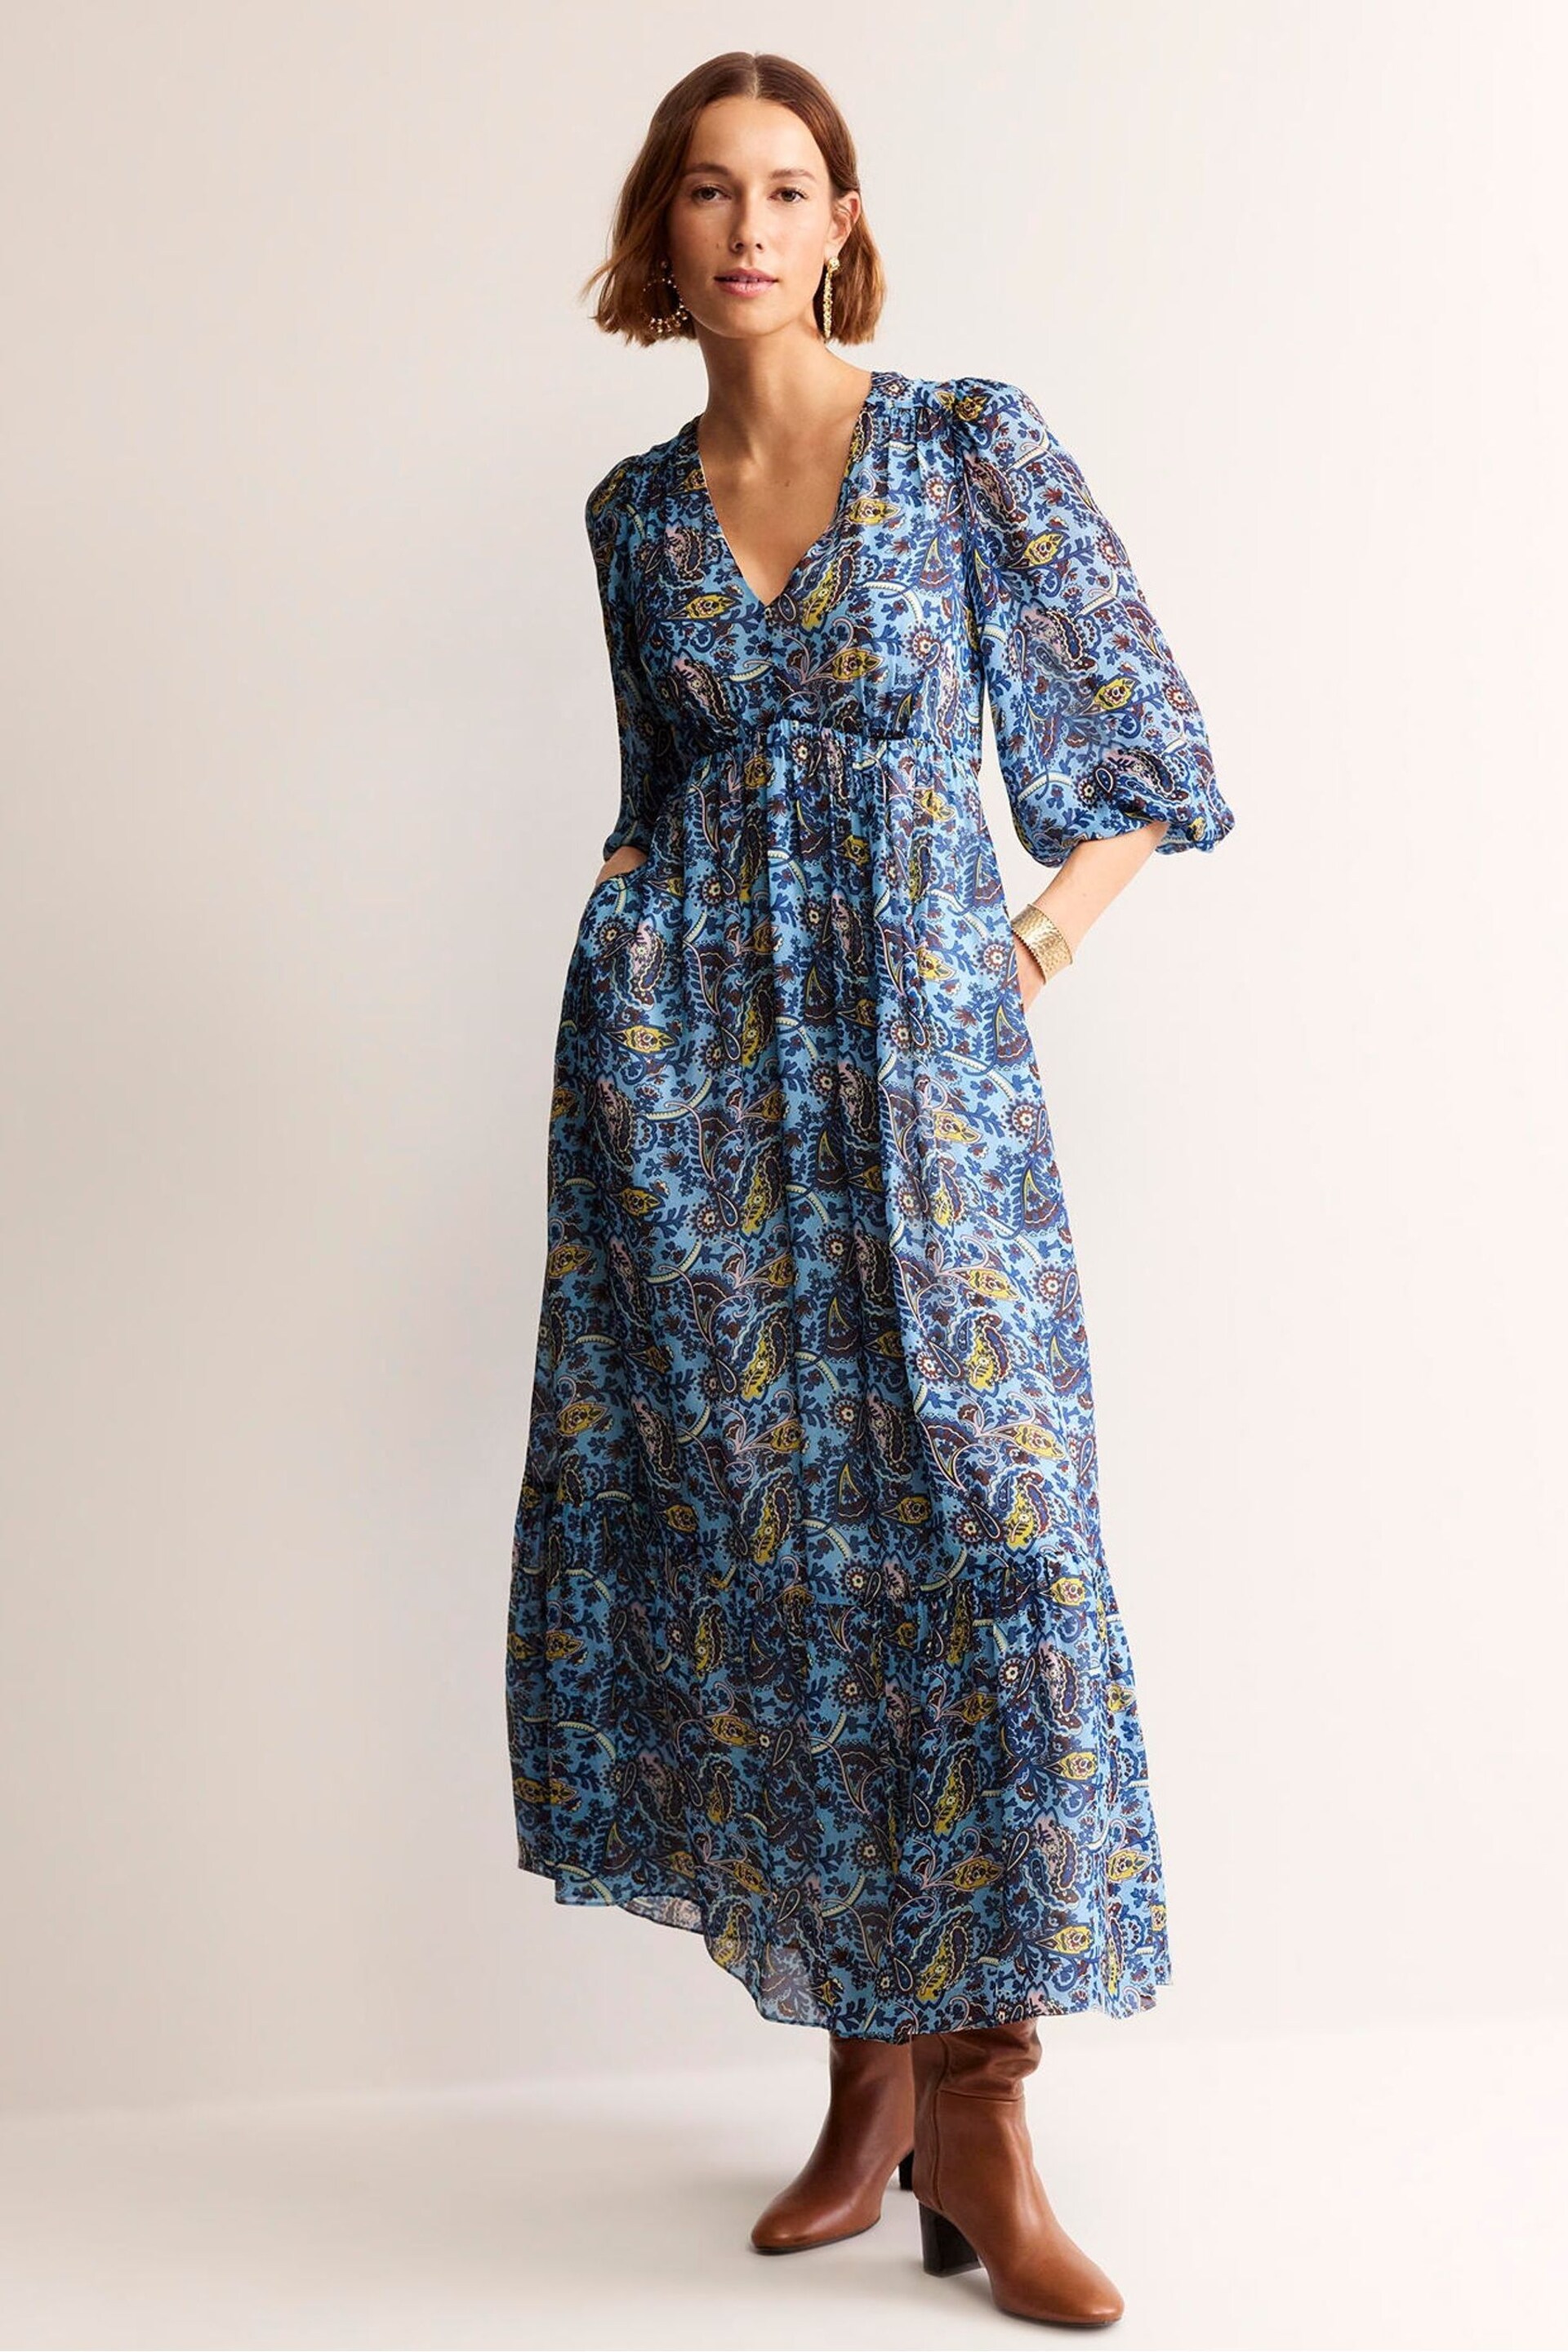 Boden Blue Petite V-Neck Puff Maxi Dress - Image 4 of 5